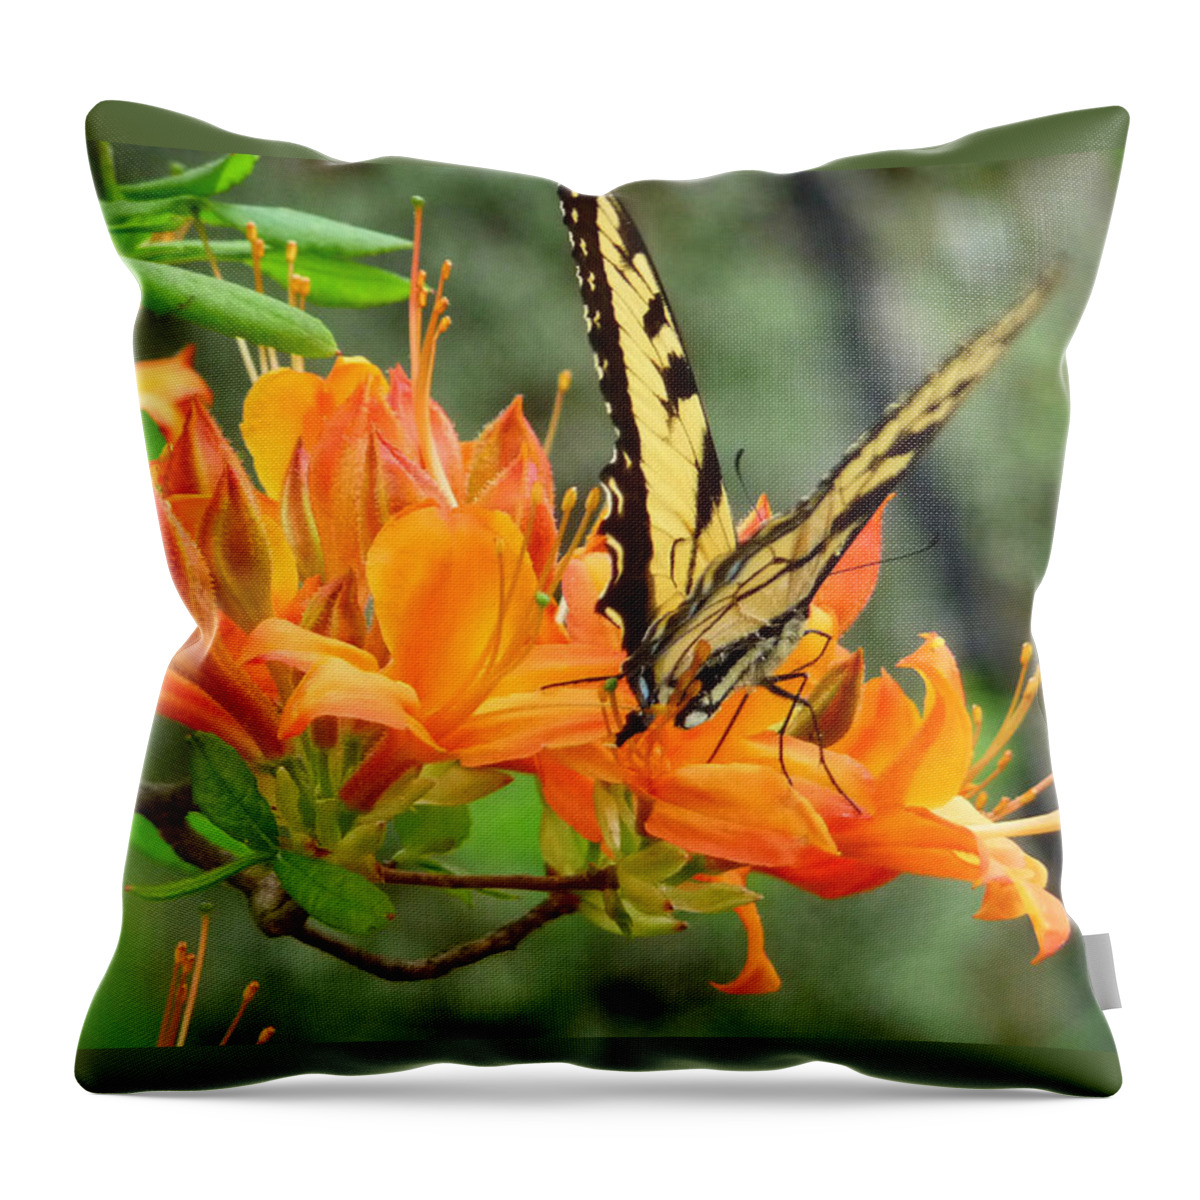 Butterfly Throw Pillow featuring the photograph Sweet Spot by Jim Whalen